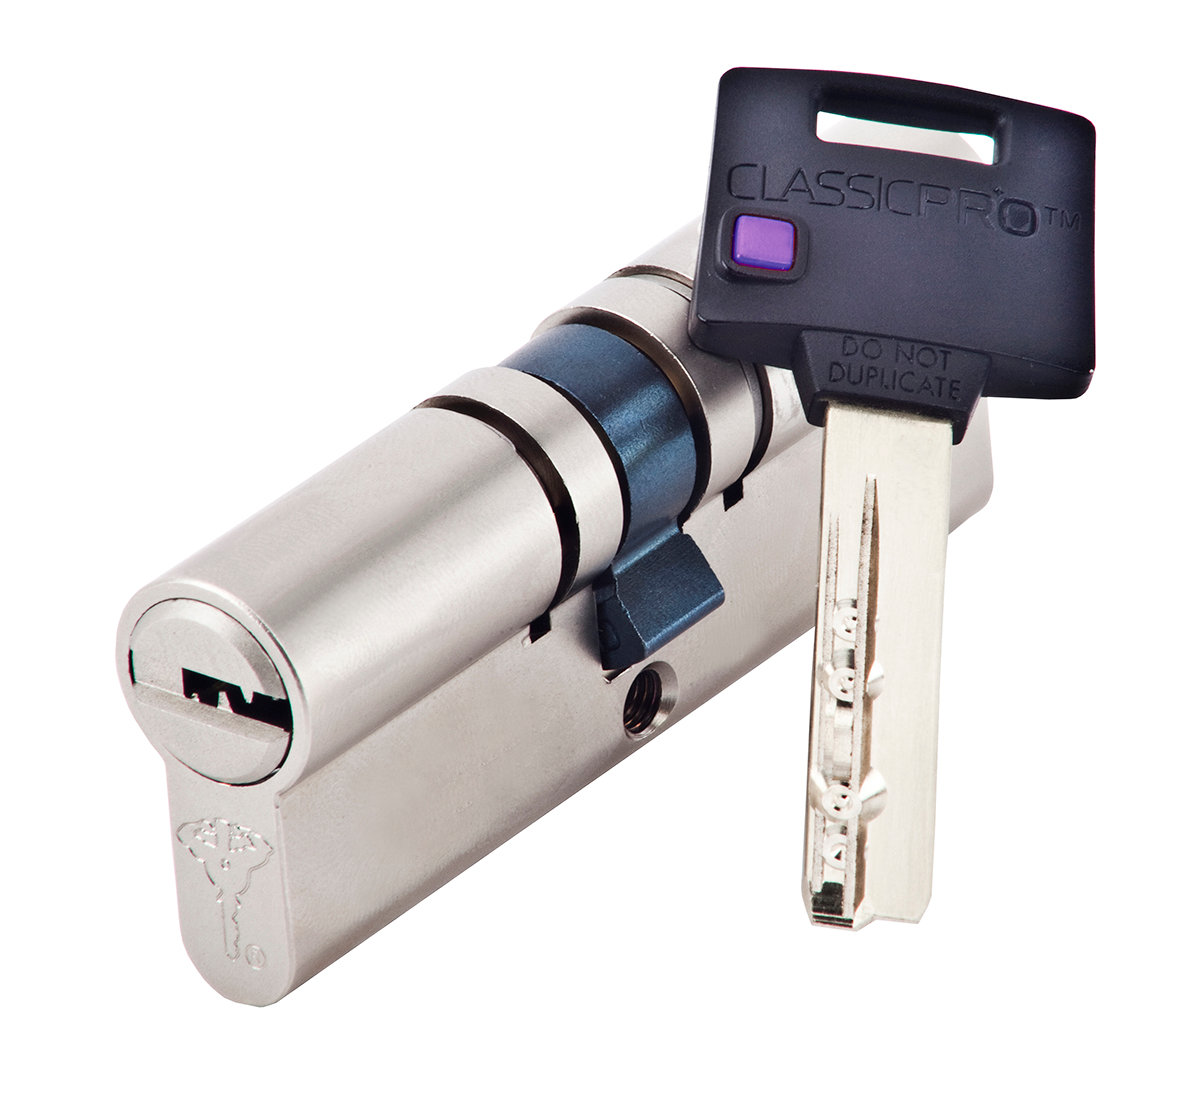 Цилиндр Mul-t-Lock Classic Pro ключ-ключ (размер 35x50 мм) - Никель, Флажок (3 ключа)